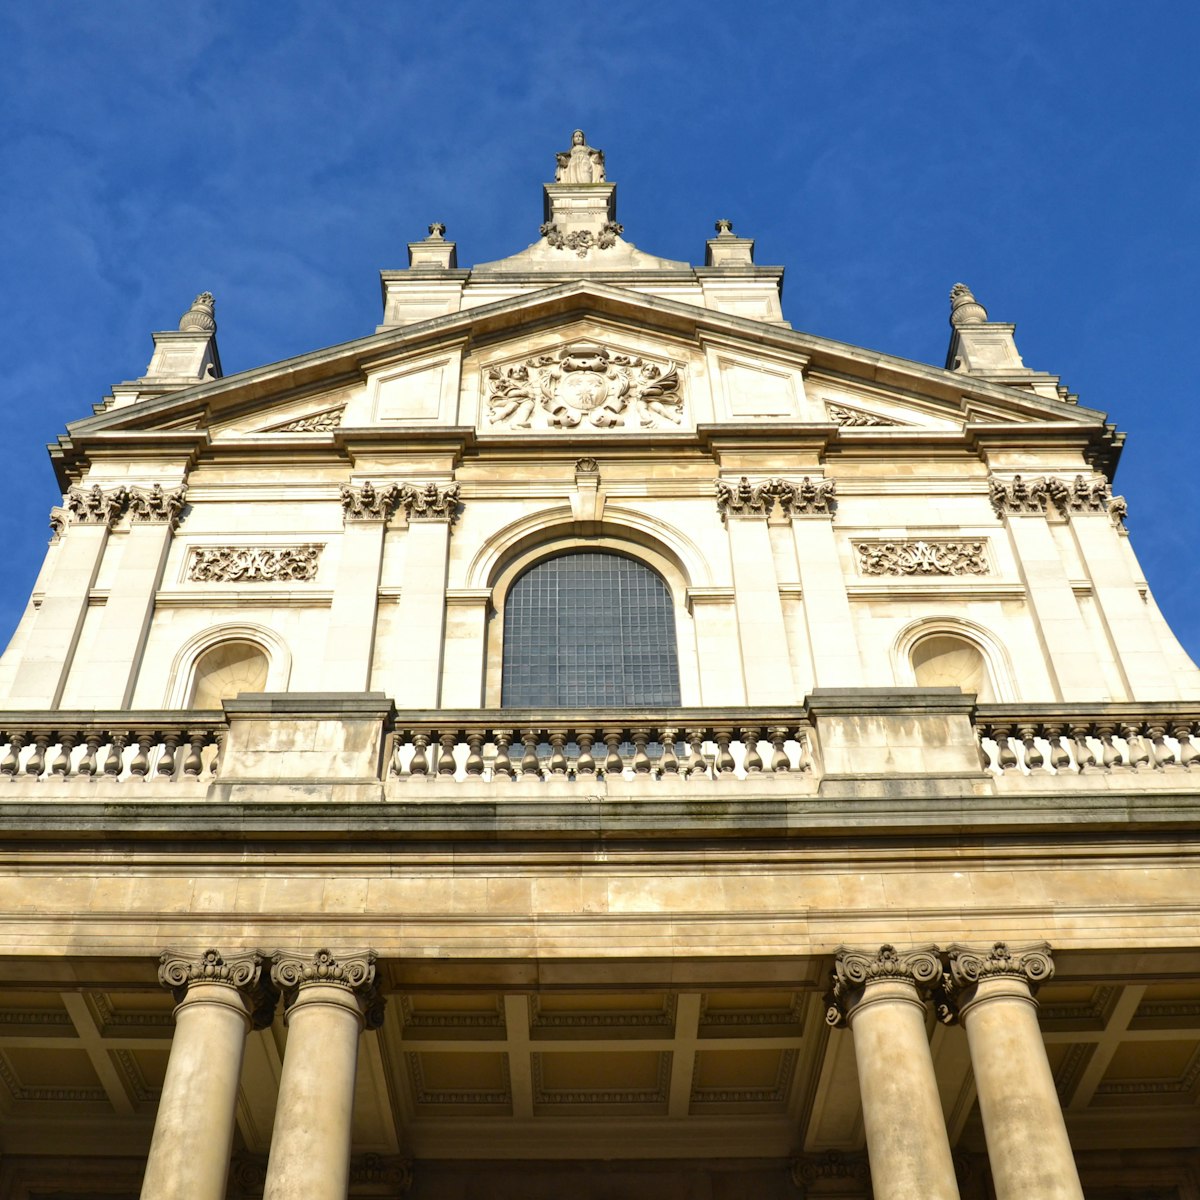 The exterior of Brompton Oratory